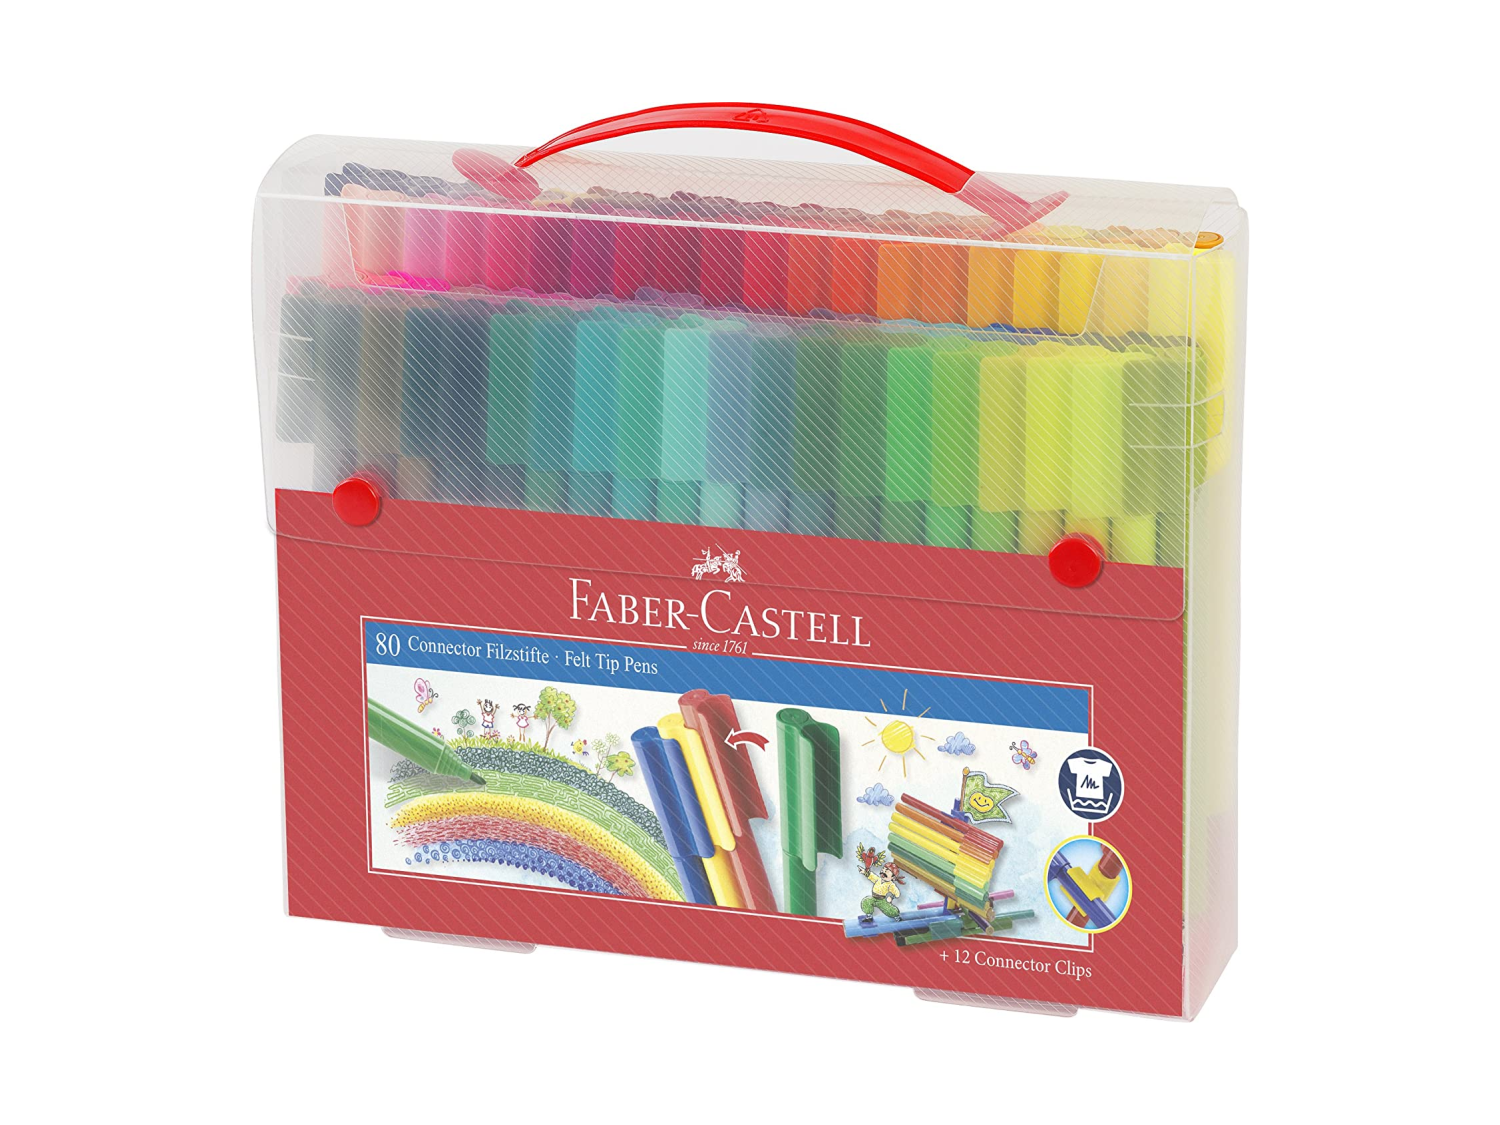 Faber Castell Gift Set con 80 pennarelli Connector Pens + 12 Connector Clips